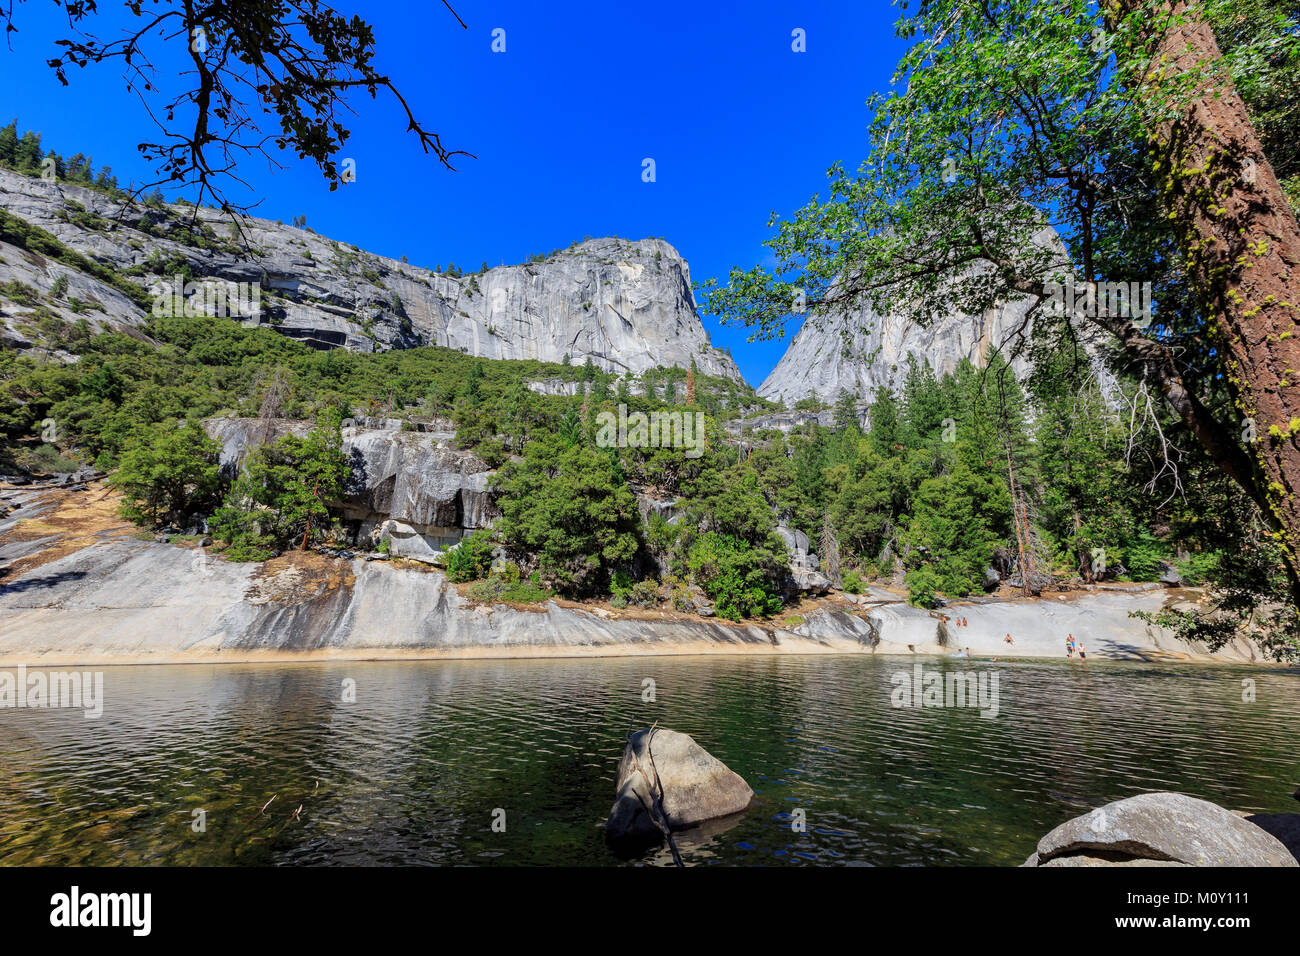 The beautiful merced river in Yosemite National Park, California, USA Stock Photo